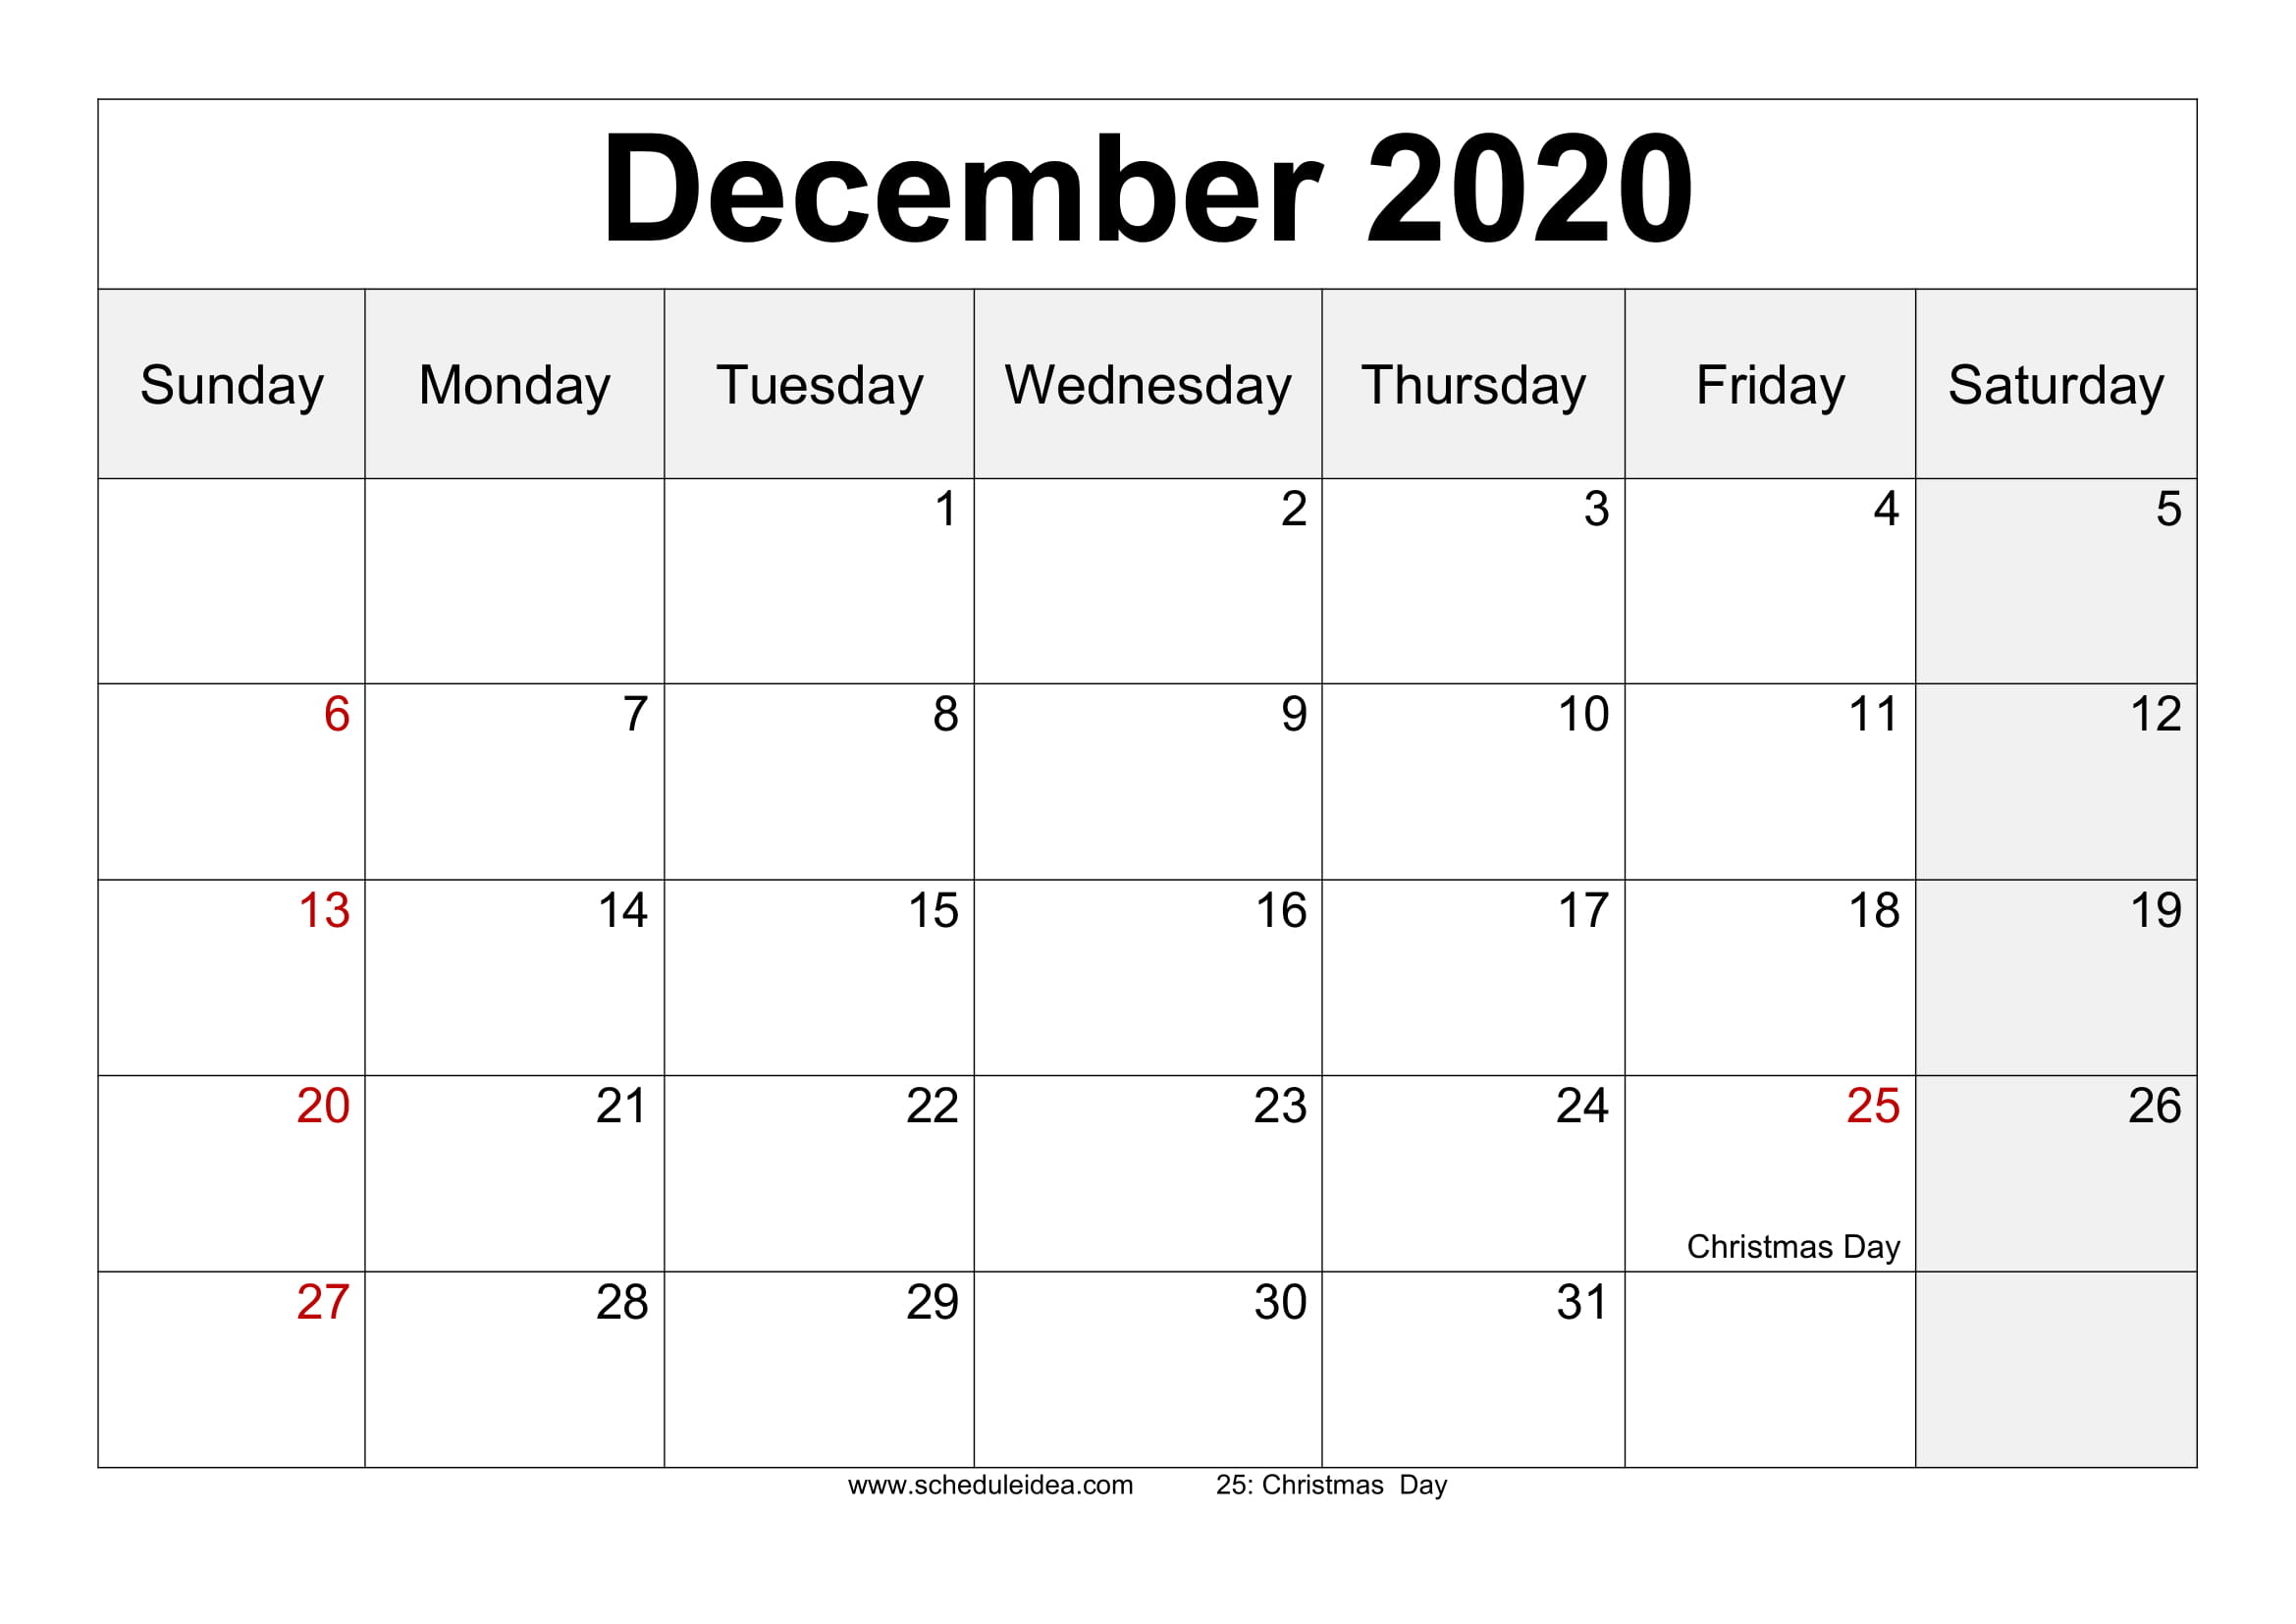 December 2020 Printable Calendar - Editable Templates Editable Calendar December 2020 And January 2021